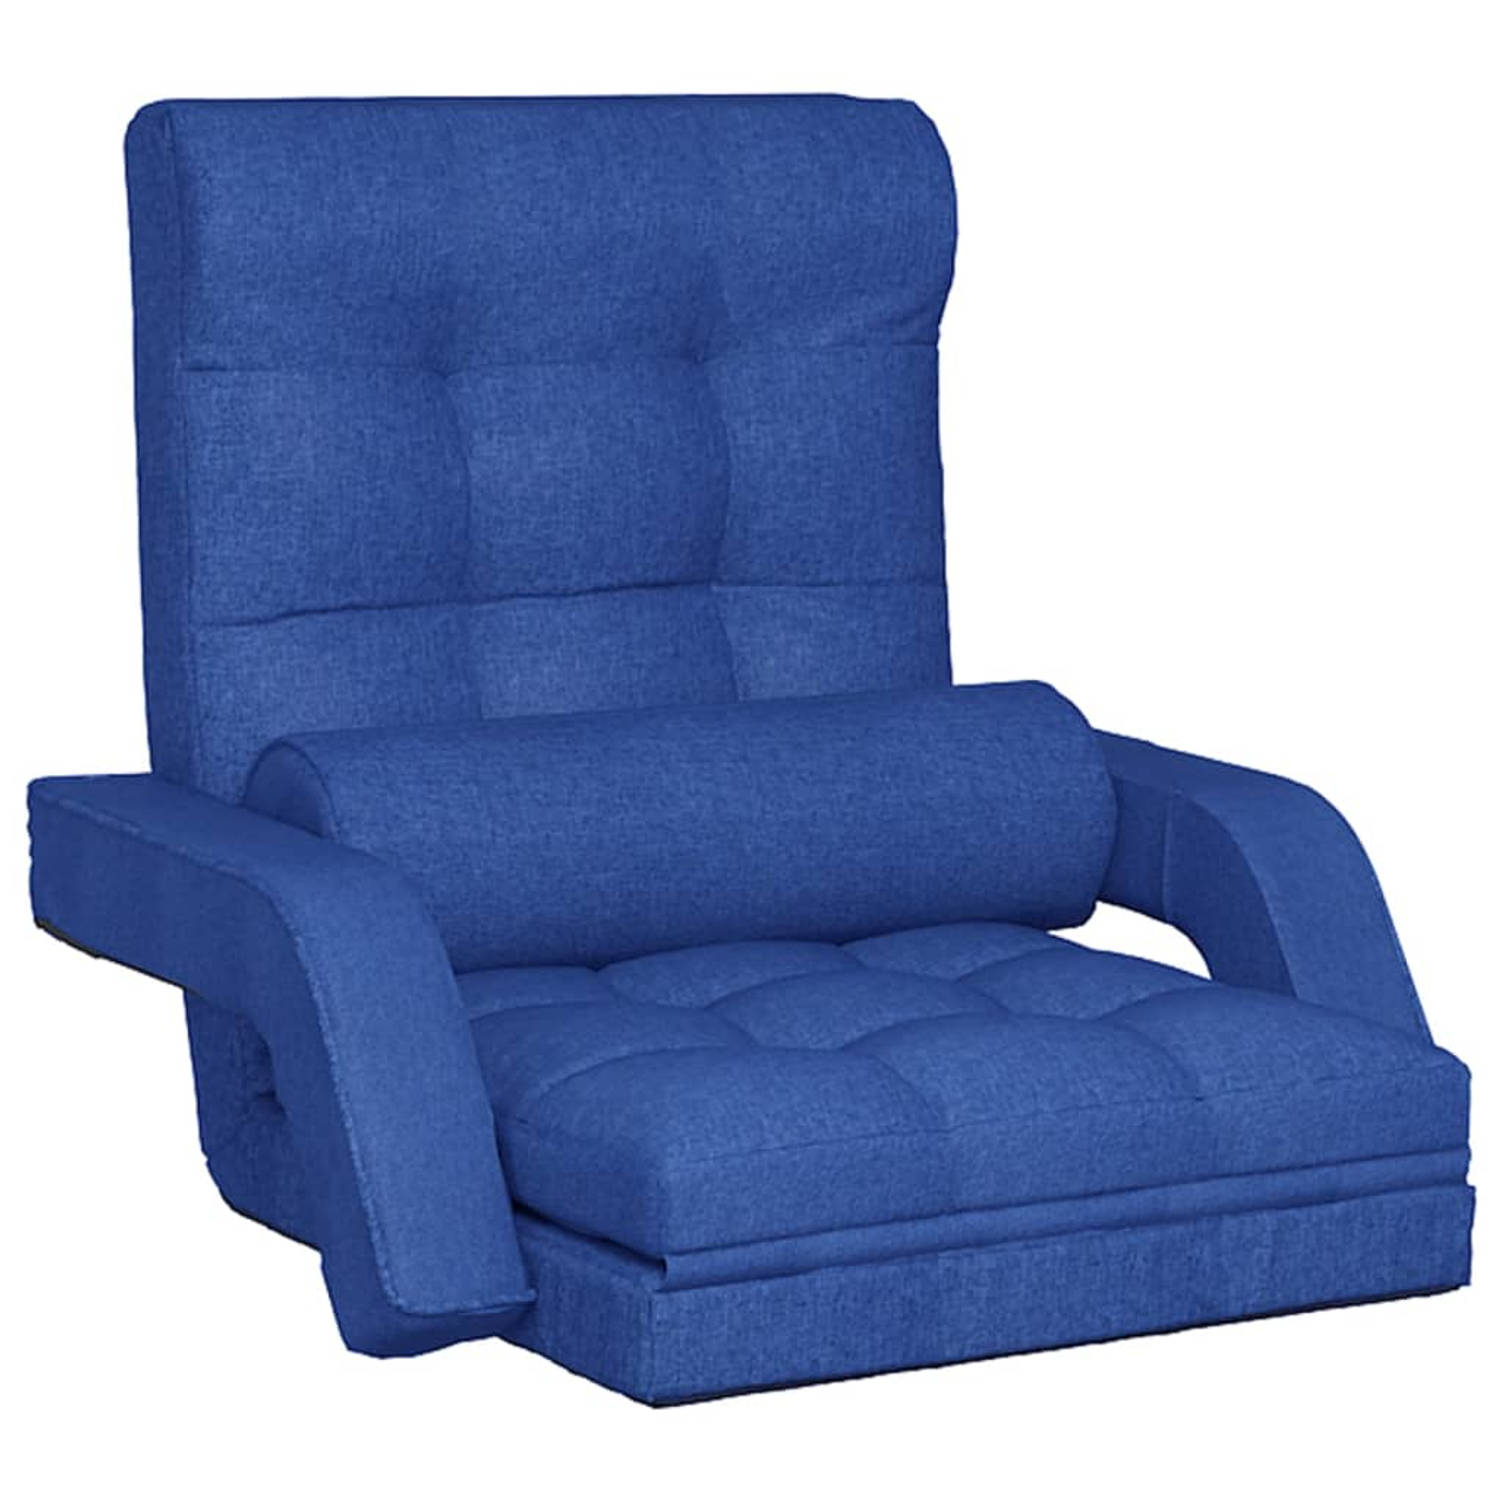 The Living Store Vloerstoel met bedfunctie inklapbaar stof blauw - Chaise longue